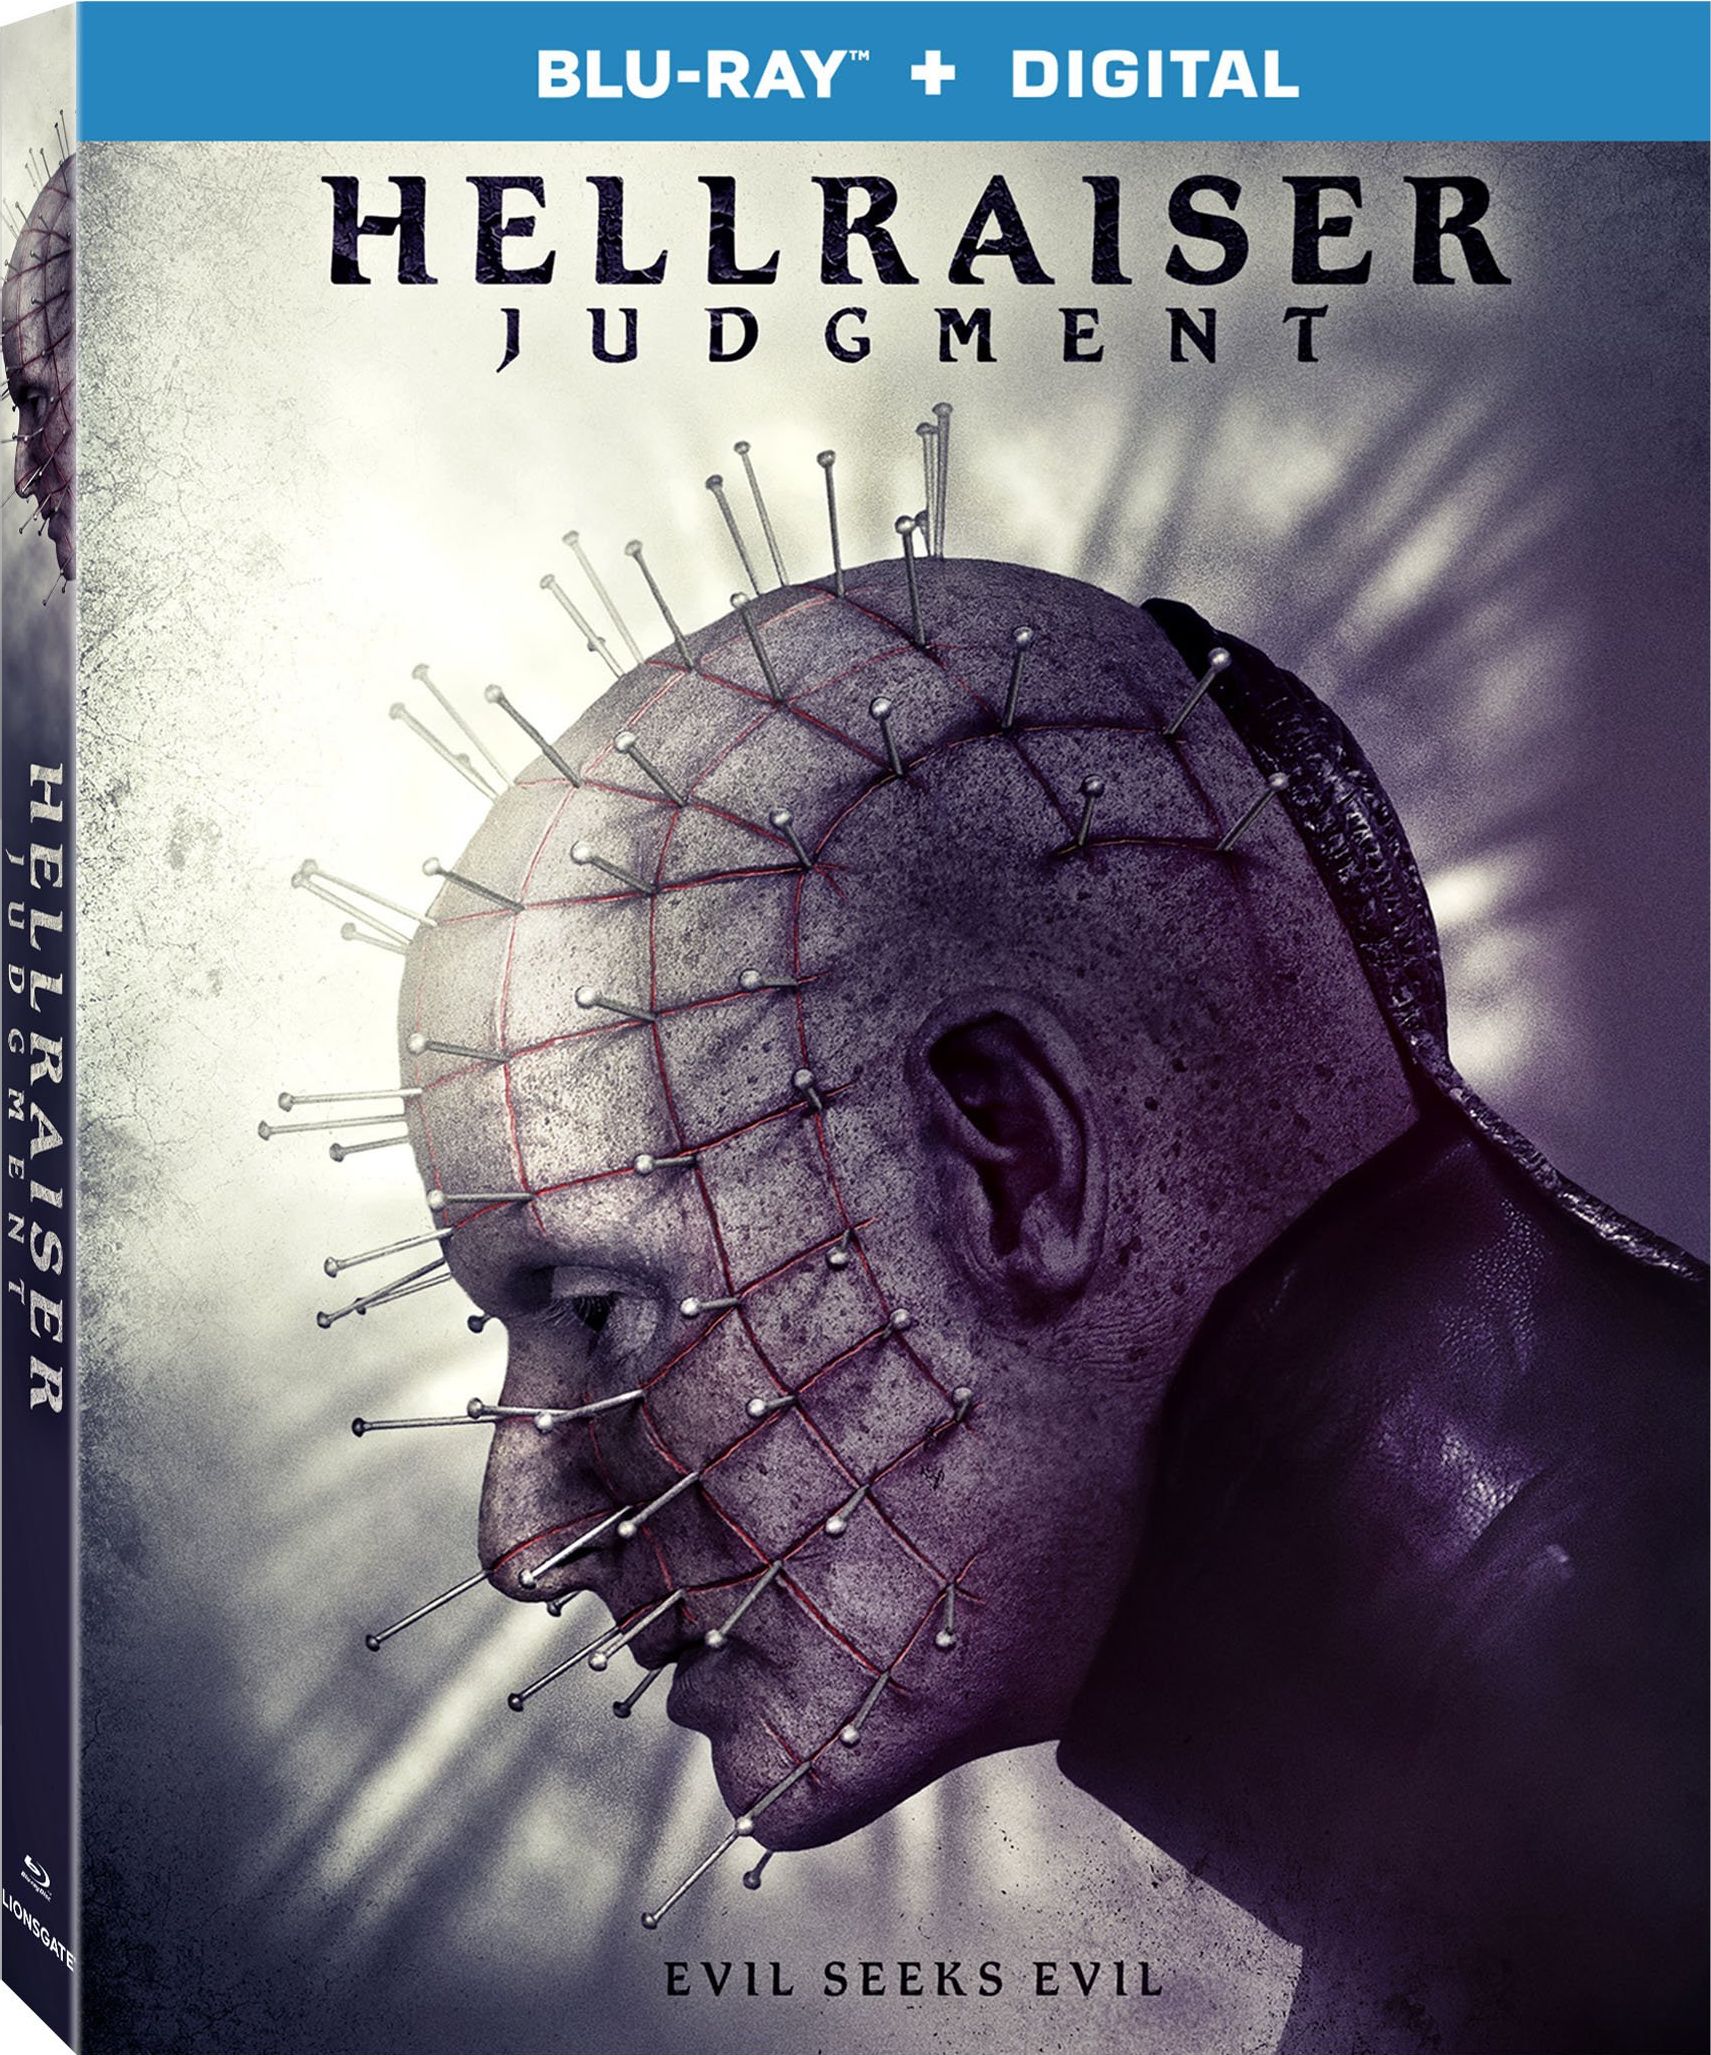 Hellraiser: Judgment DVD Release Date February 13, 2018